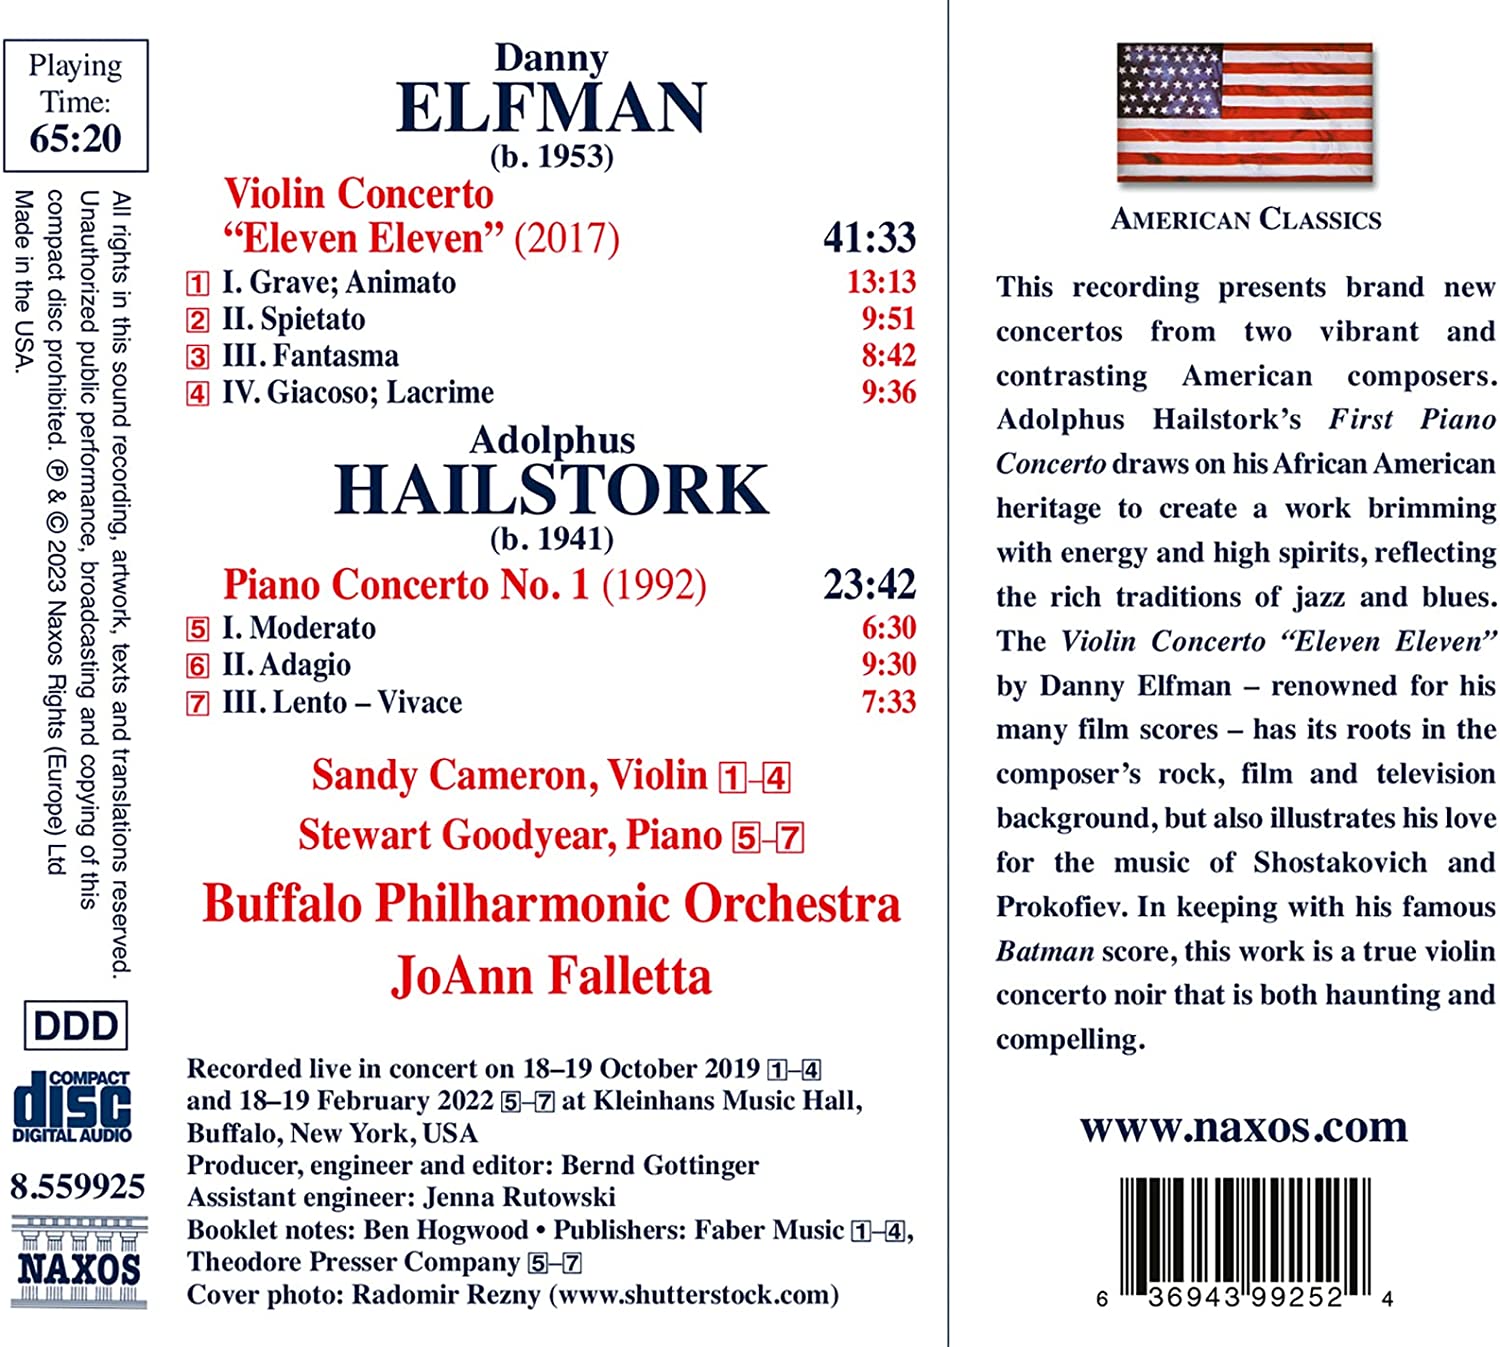 Joann Falletta 대니 엘프먼: 바이올린 협주곡 ‘일레븐 일레븐' &  아돌퍼스 헤일스톡: ‘피아노 협주곡 1번’  (Danny Elfman: Violin Concerto 'Eleven Eleven' & Adolphus Hailstork: Piano Concerto No. 1)